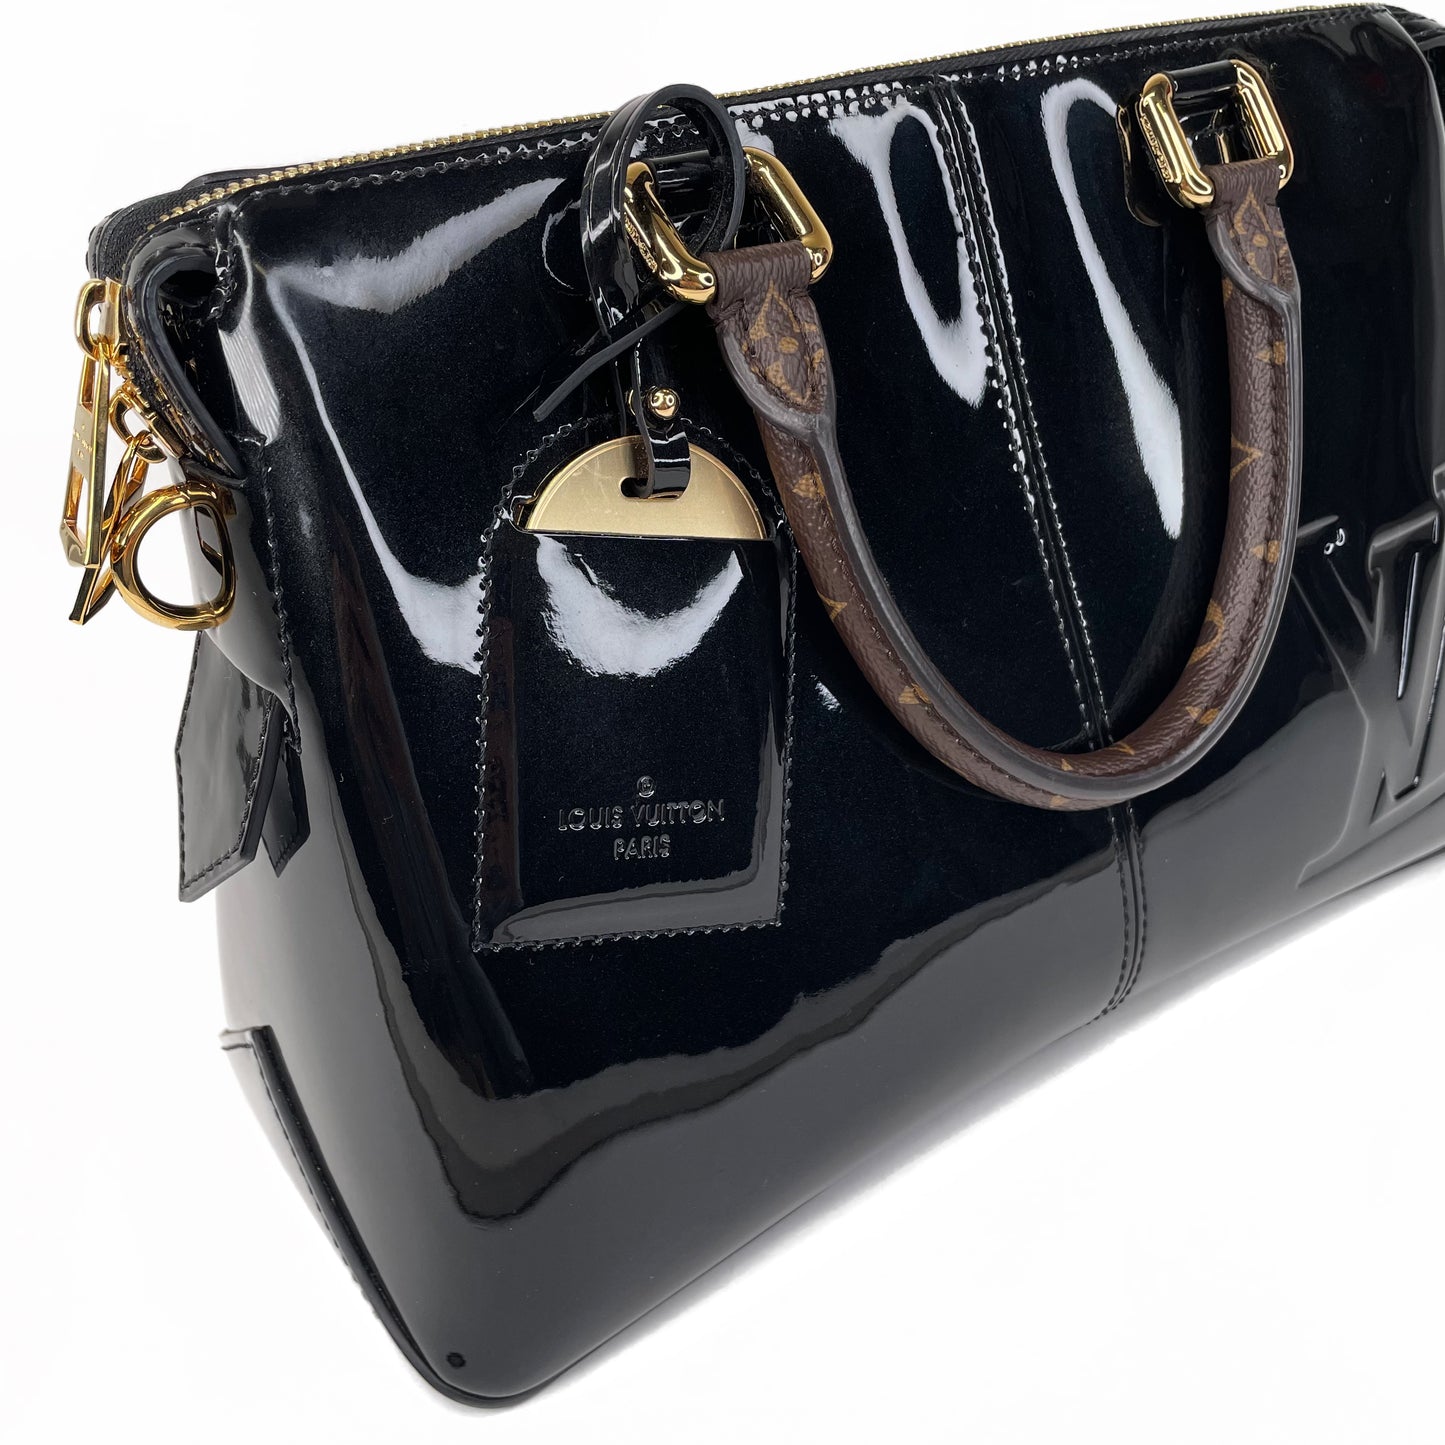 Louis Vuitton Vernis Miroir Tote Bag